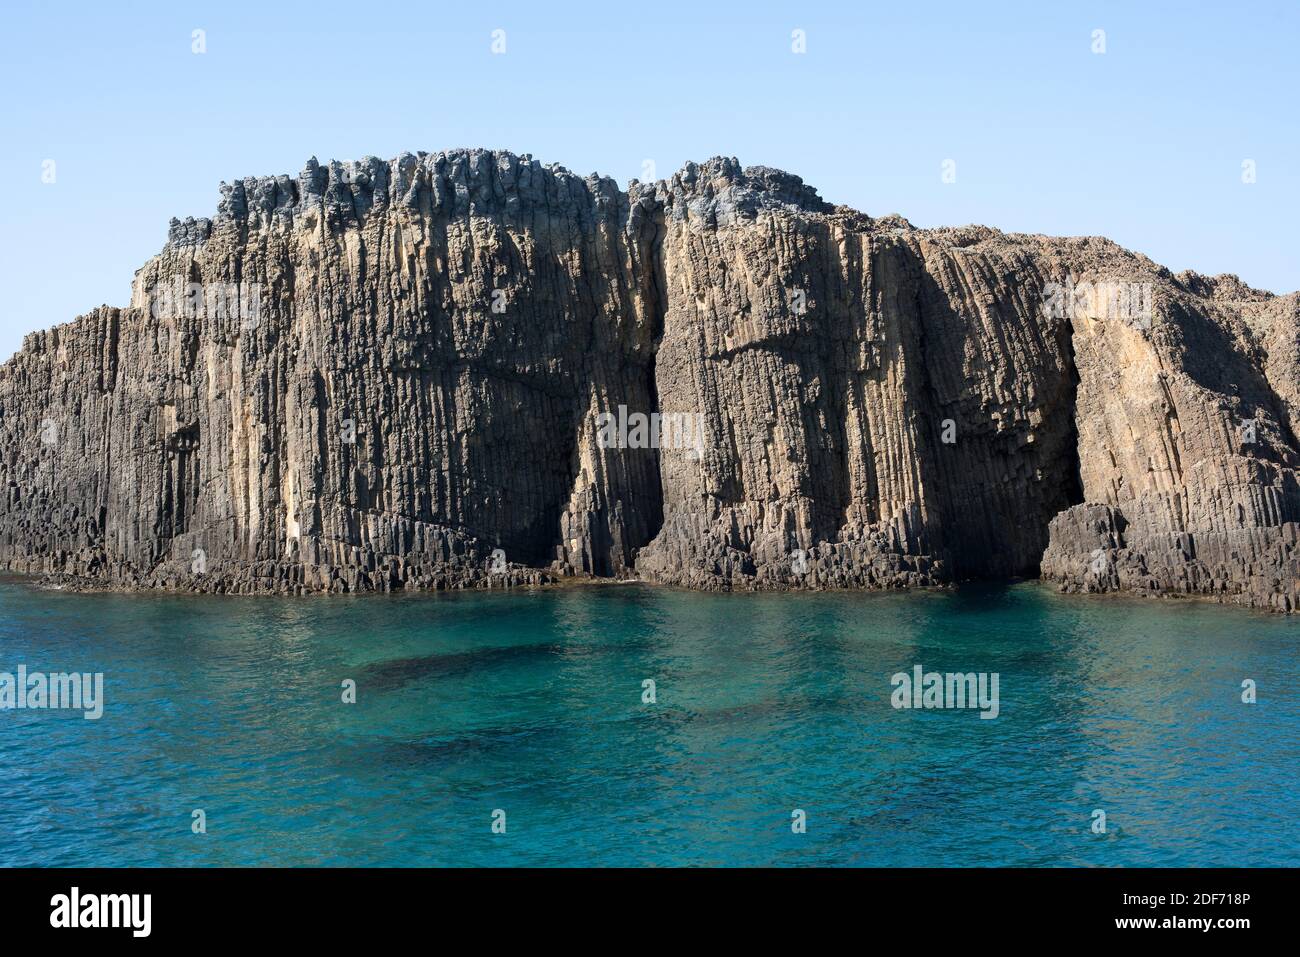 Columnar basalt. Basalt is an extrusive igneous rock. This photo was taken in Glaronissia Islet, Milos Island, Greece. Stock Photo